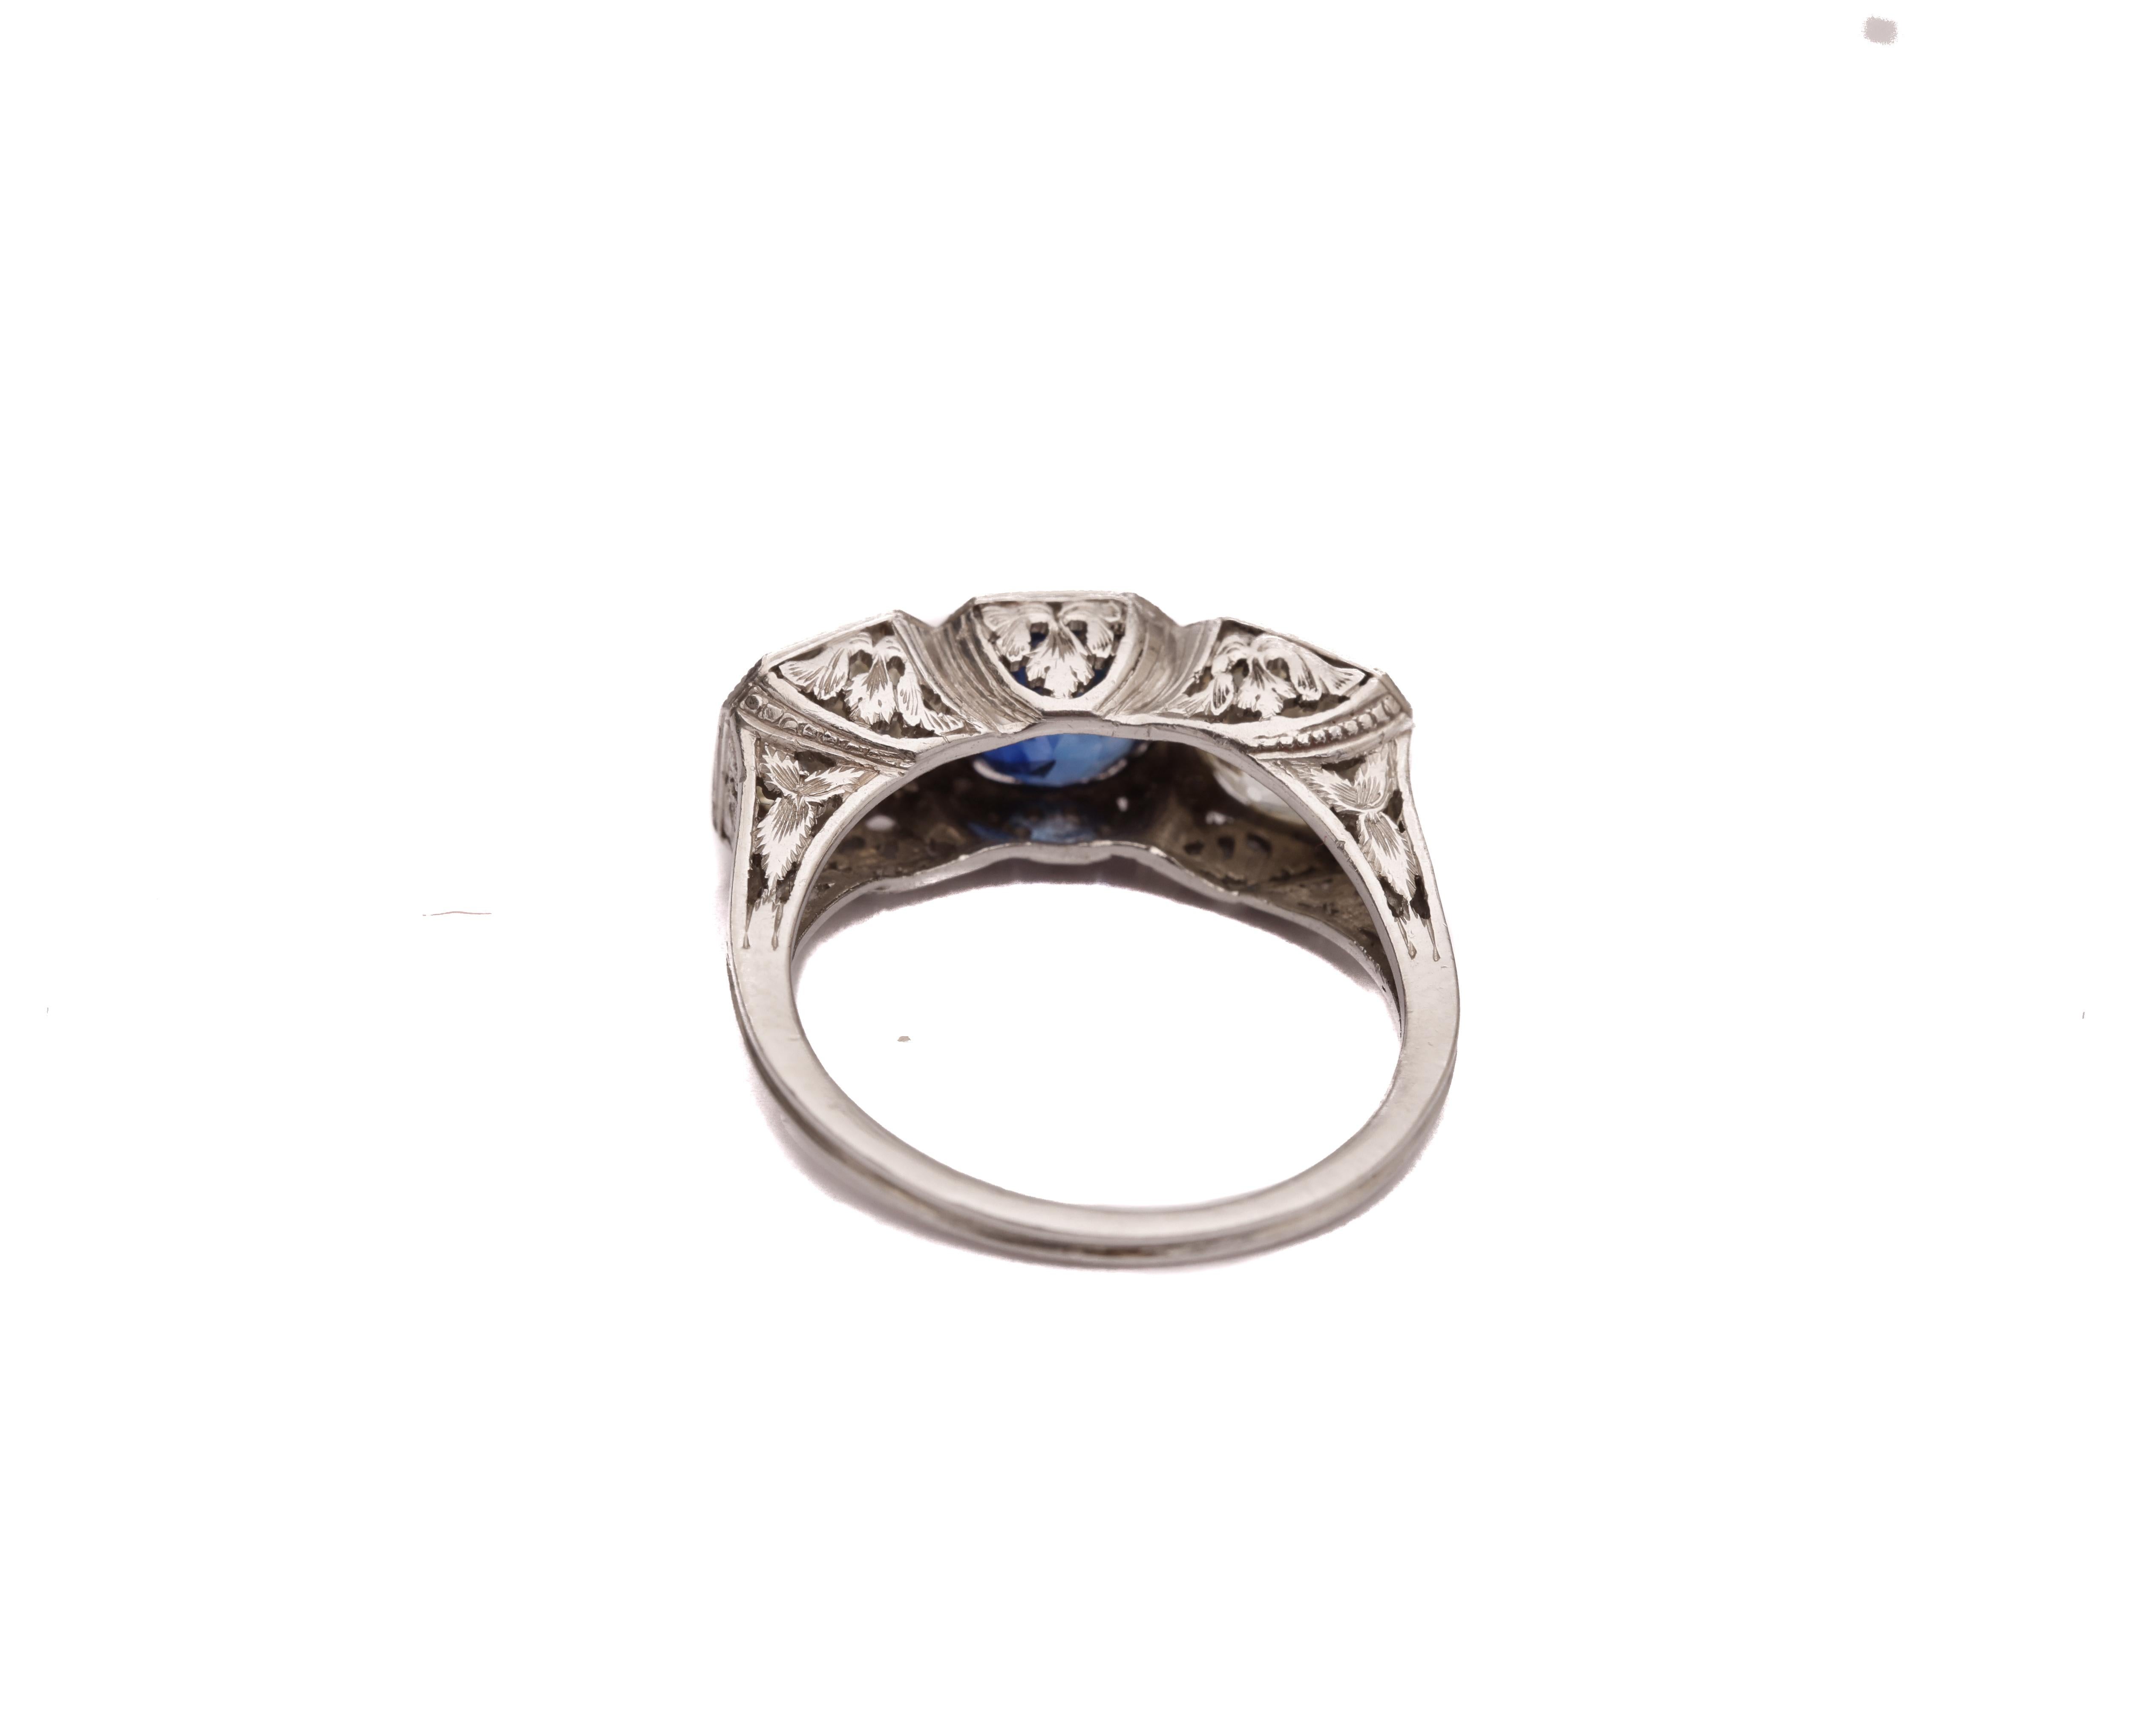 2 carat sapphire ring